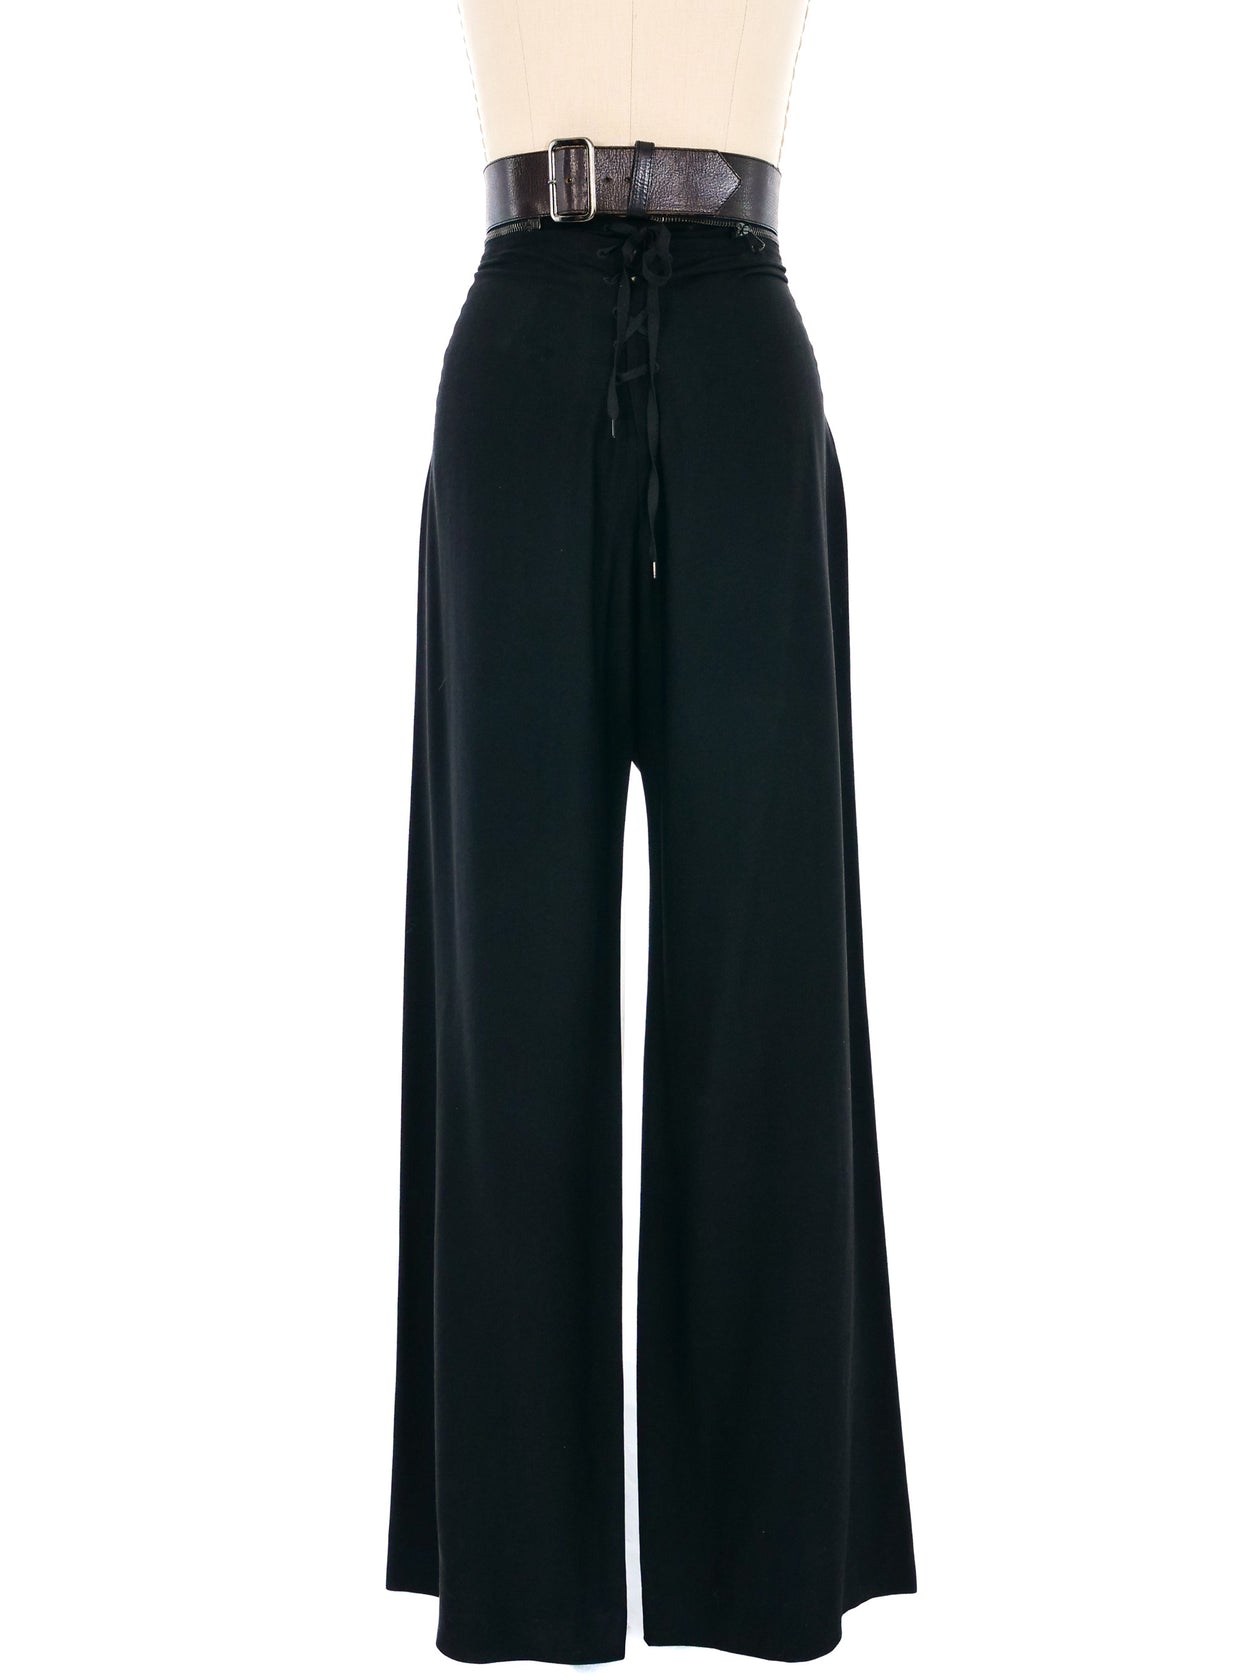 Jean Paul Gaultier JPG Black Wool Sailor Pants Wide Leg hi-rise Trousers 